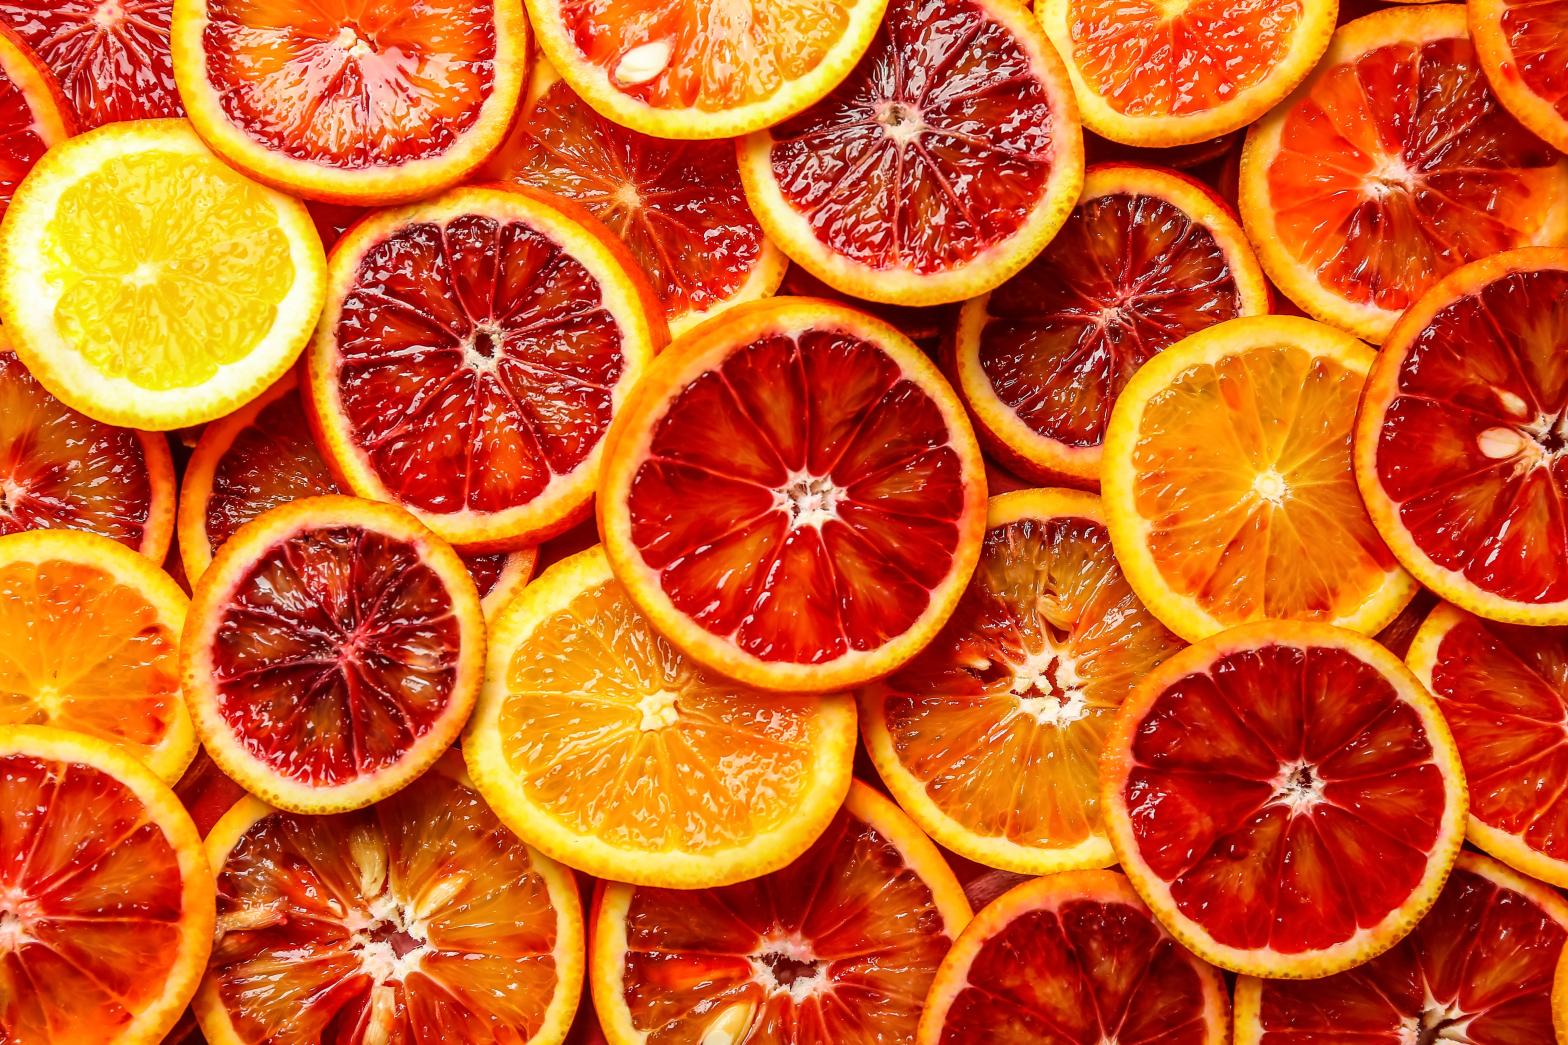 A Simple Change Could Make Blood Oranges Even Cooler